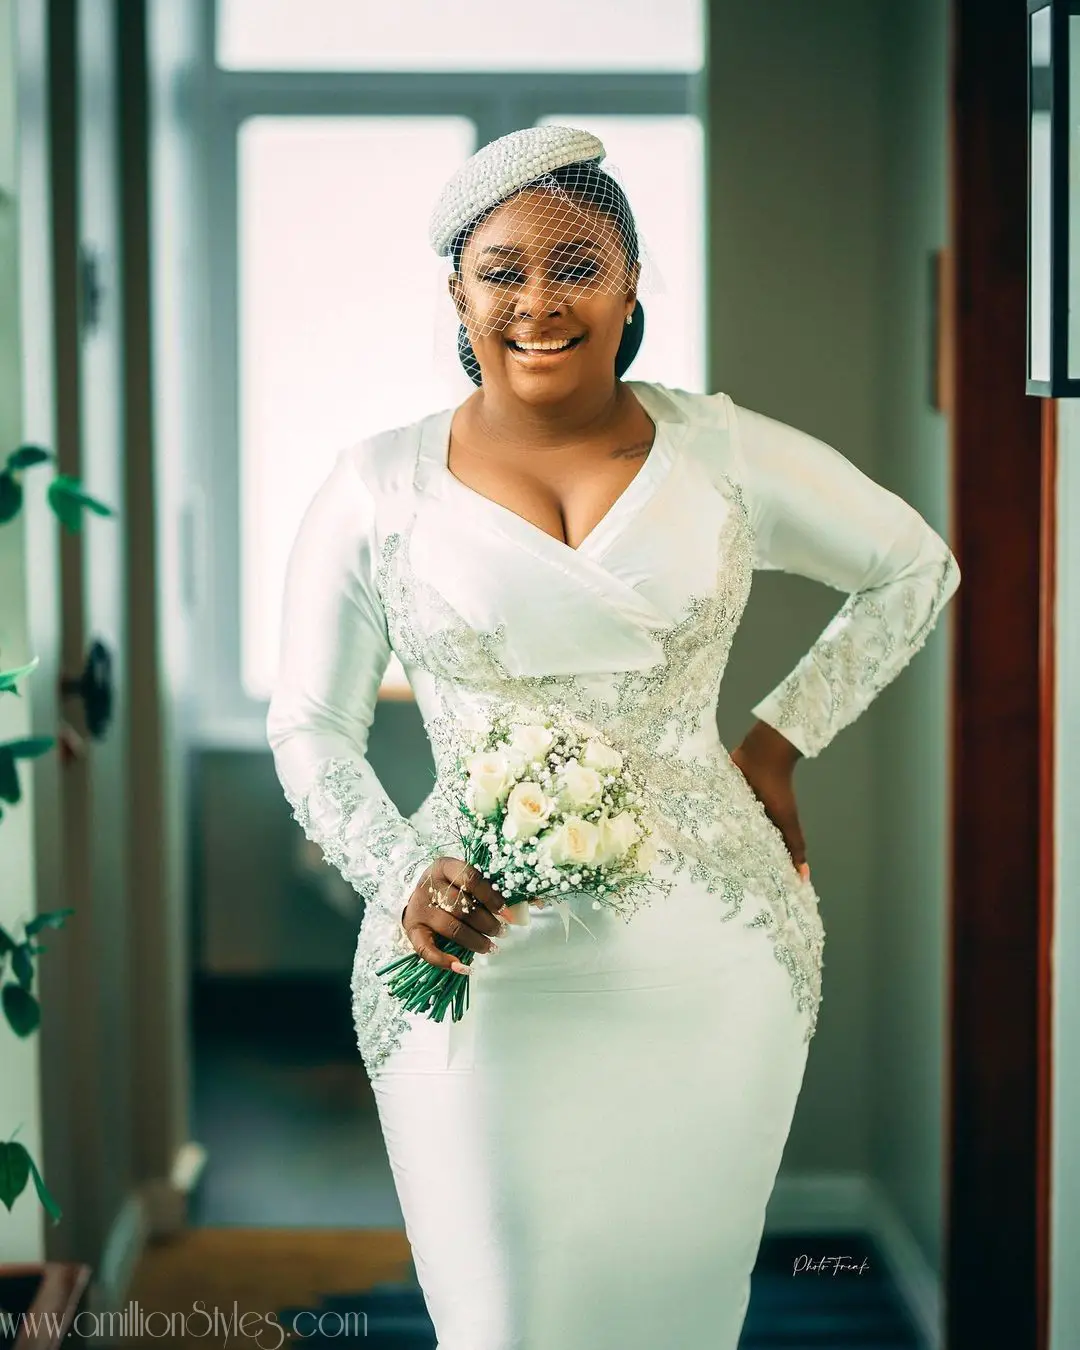 5 Civil Wedding Styles For Brides